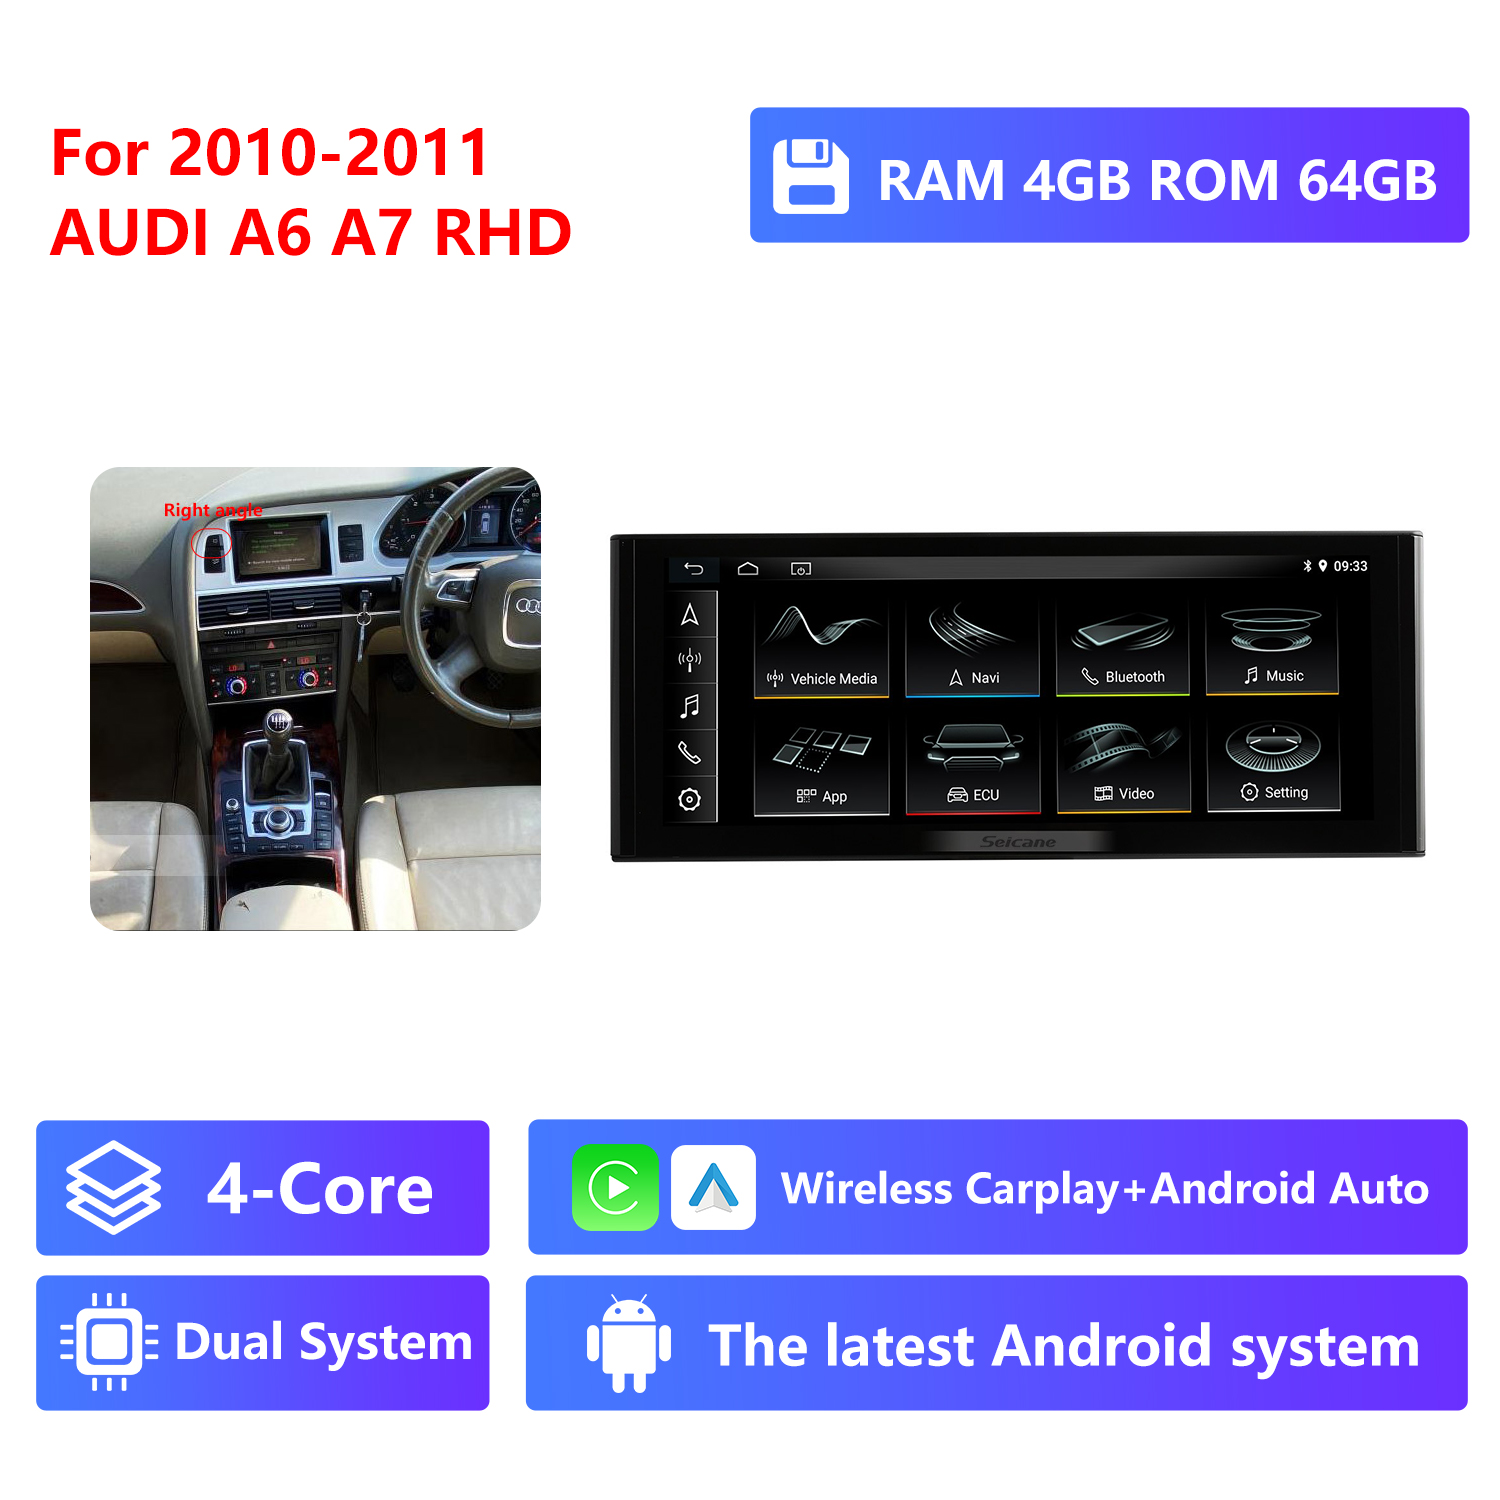 4-Core RAM 4G ROM 64G,2010-2011,RHD